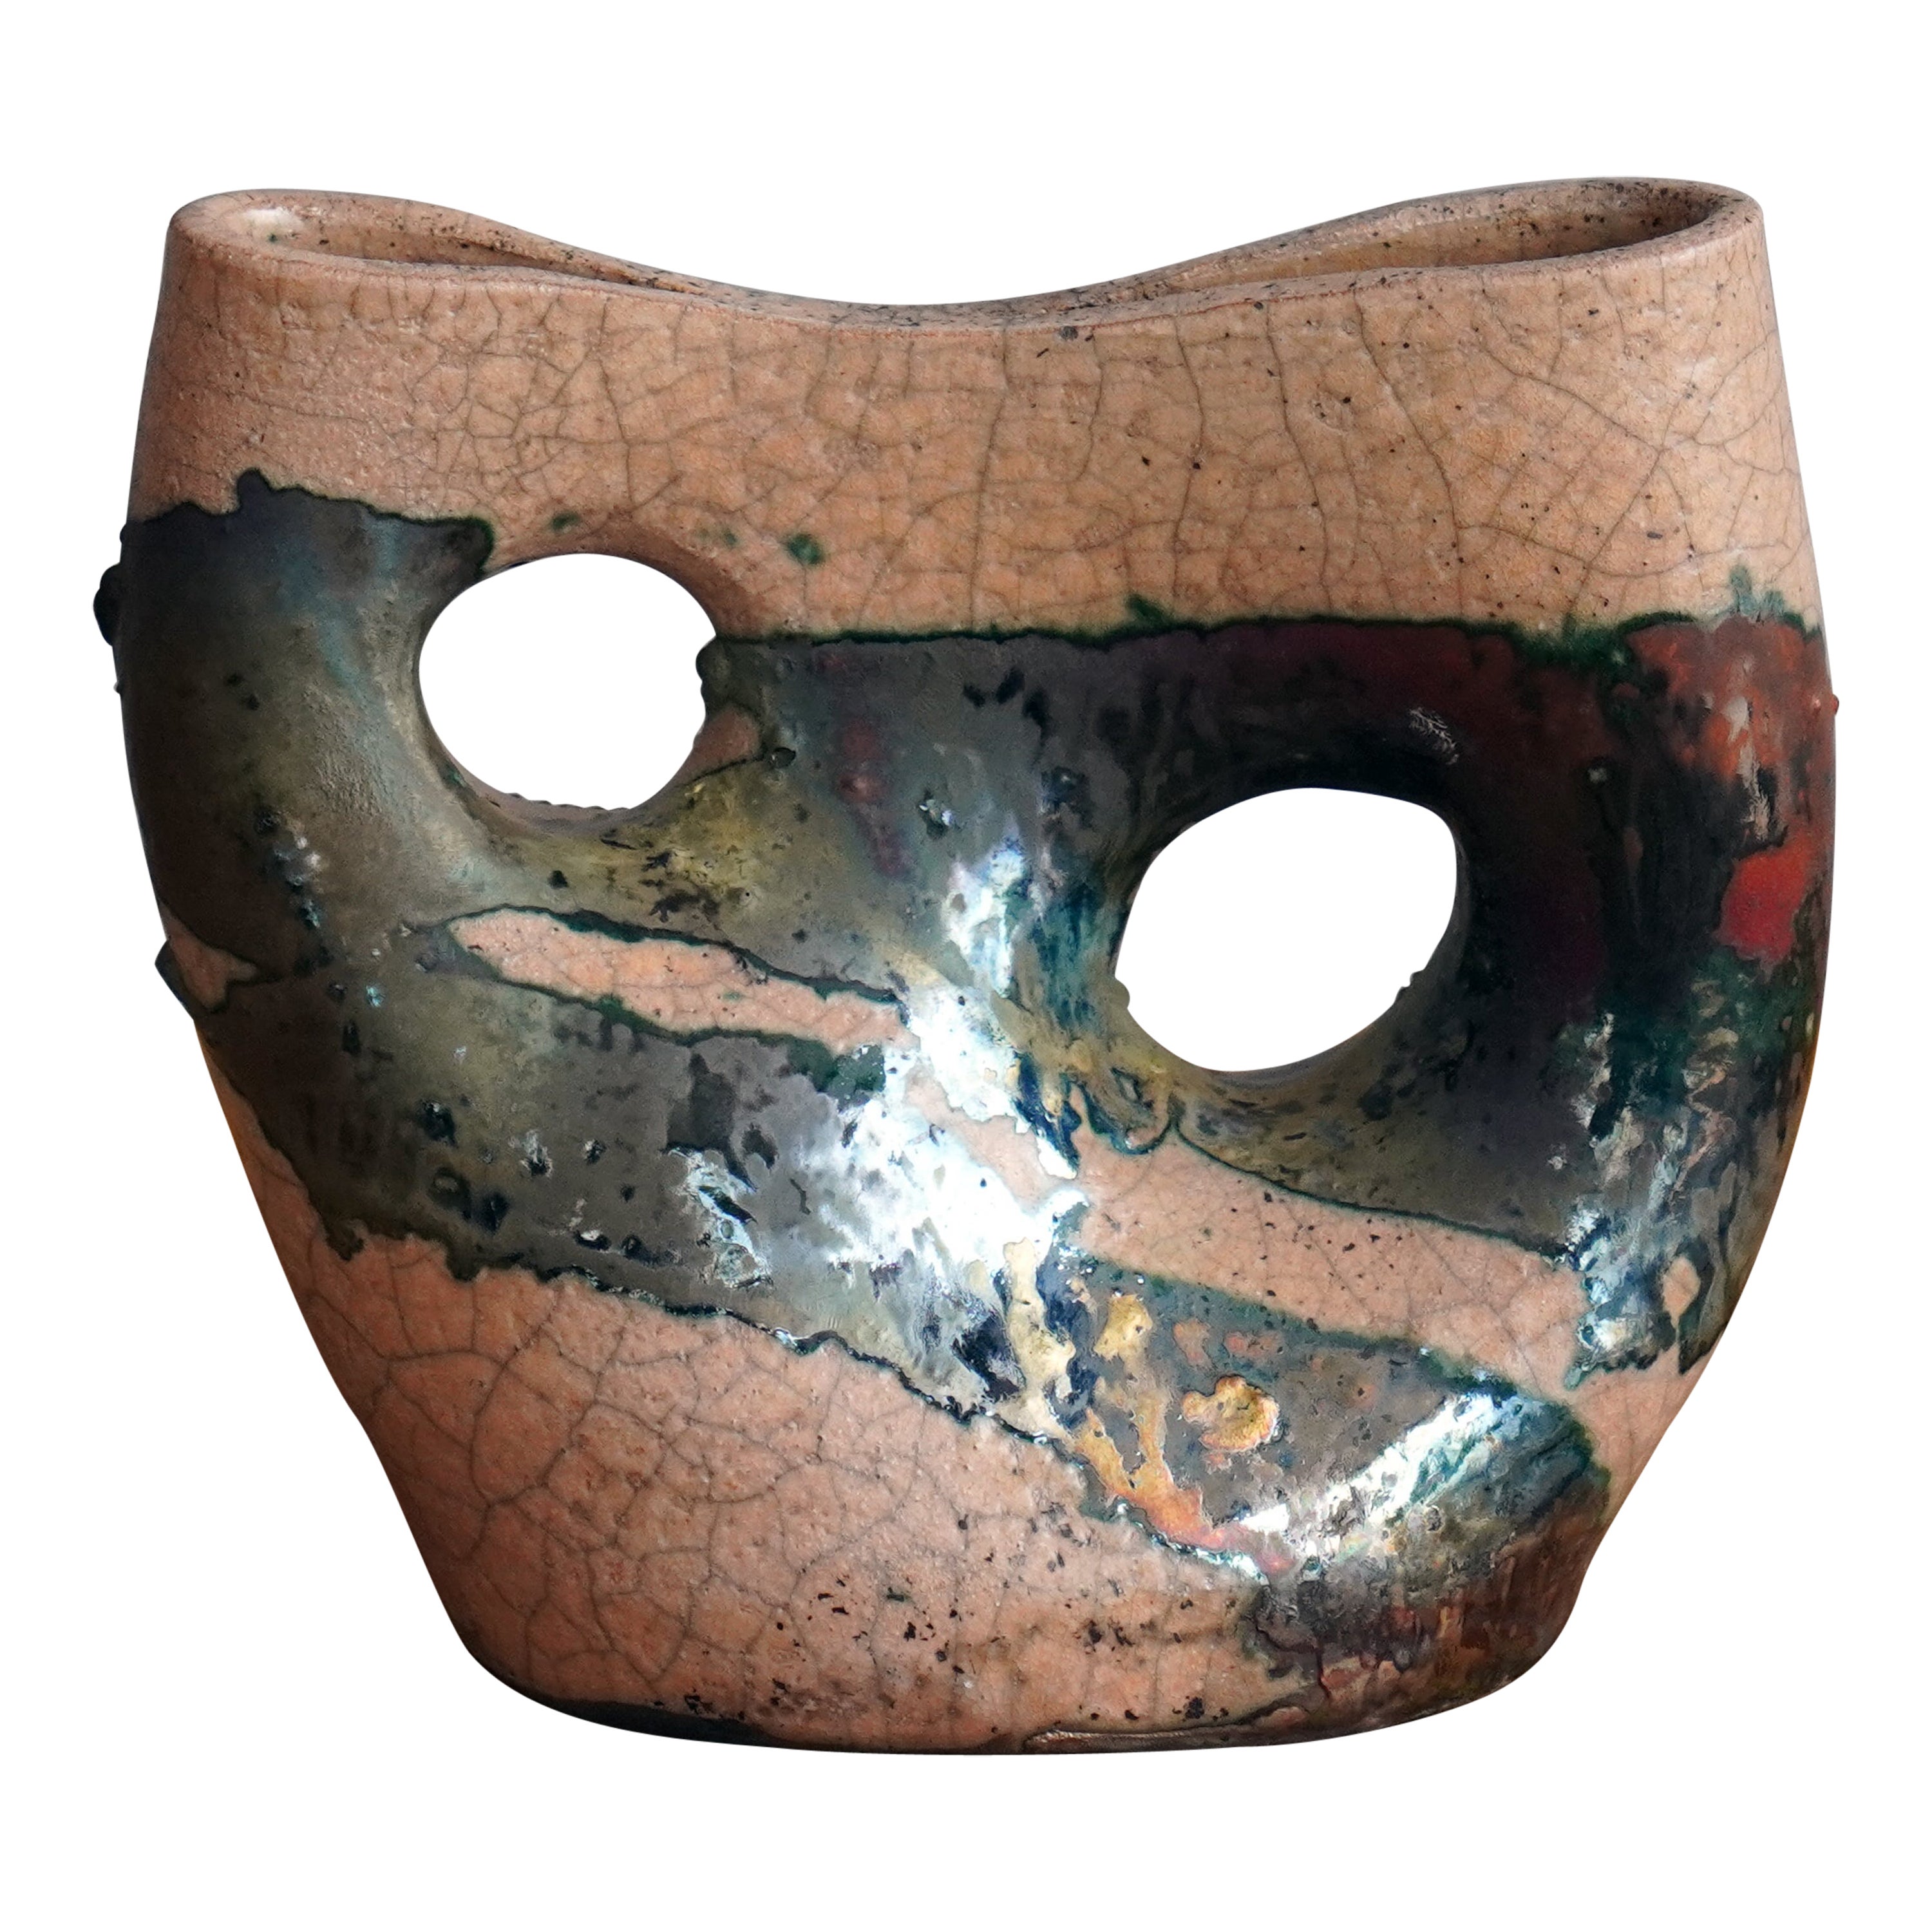 Umi Raku Pottery Vase, Half Copper Matte, Handmade Ceramic Home Decor